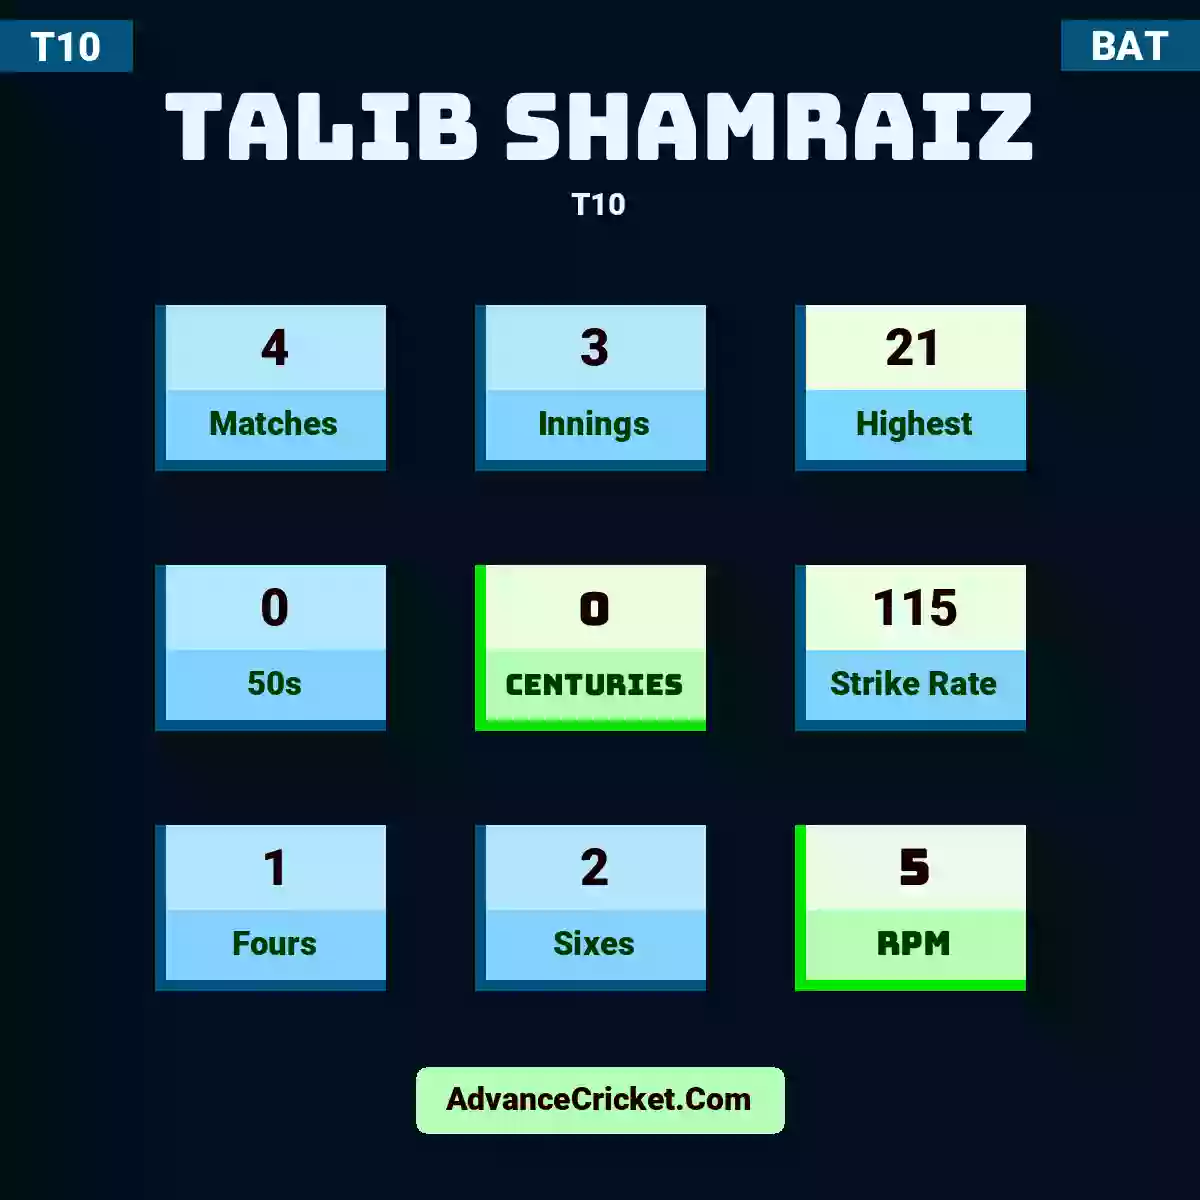 Talib Shamraiz T10 , Talib Shamraiz played 4 matches, scored 21 runs as highest, 0 half-centuries, and 0 centuries, with a strike rate of 115. T.Shamraiz hit 1 fours and 2 sixes, with an RPM of 5.